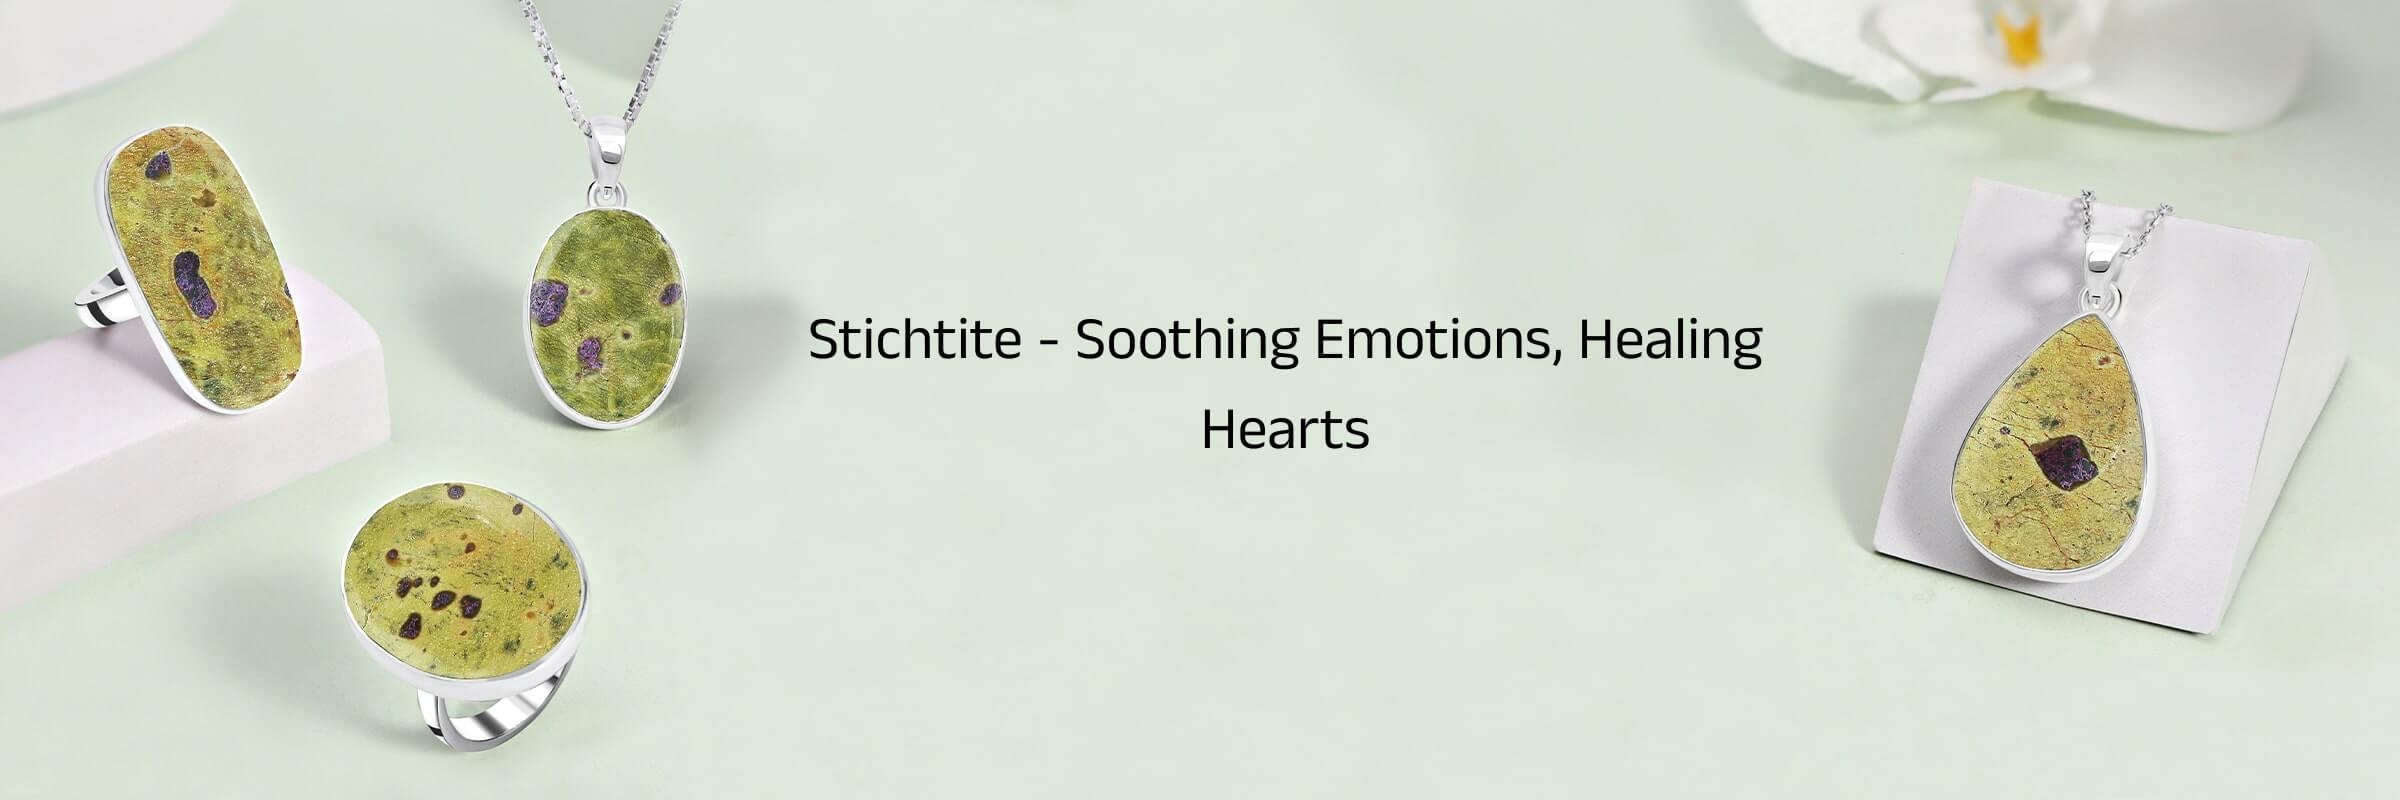 Stichtite Emotional Healing Properties